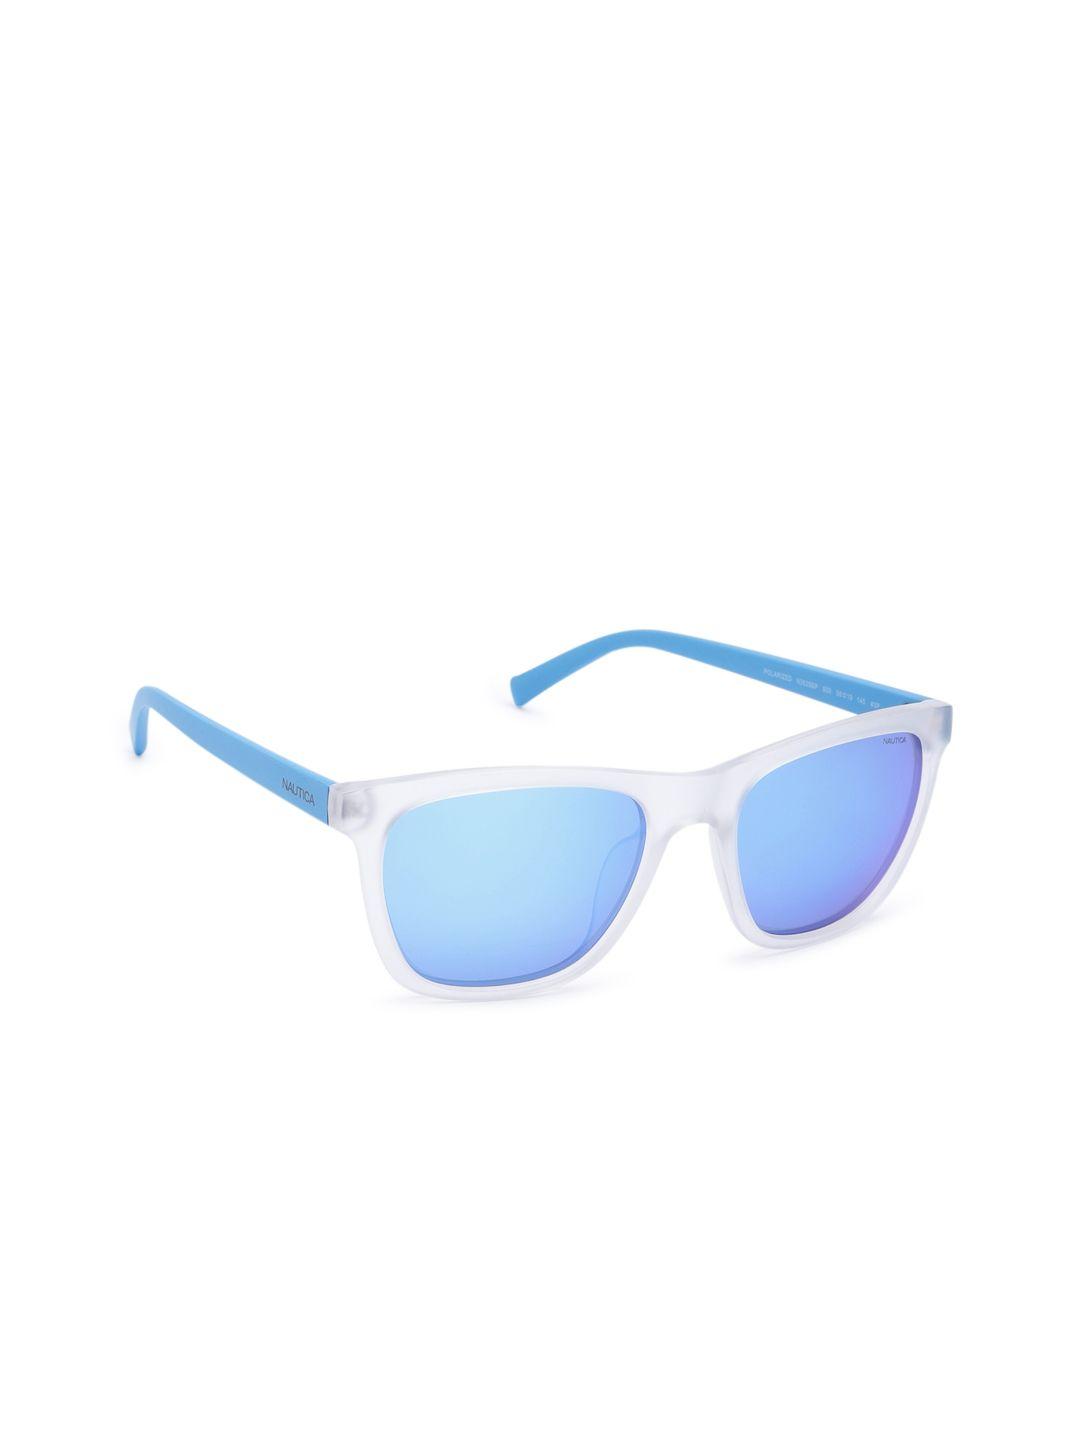 nautica men blue lens & white wayfarer sunglasses with uv protected lens 3629p 939 56 s